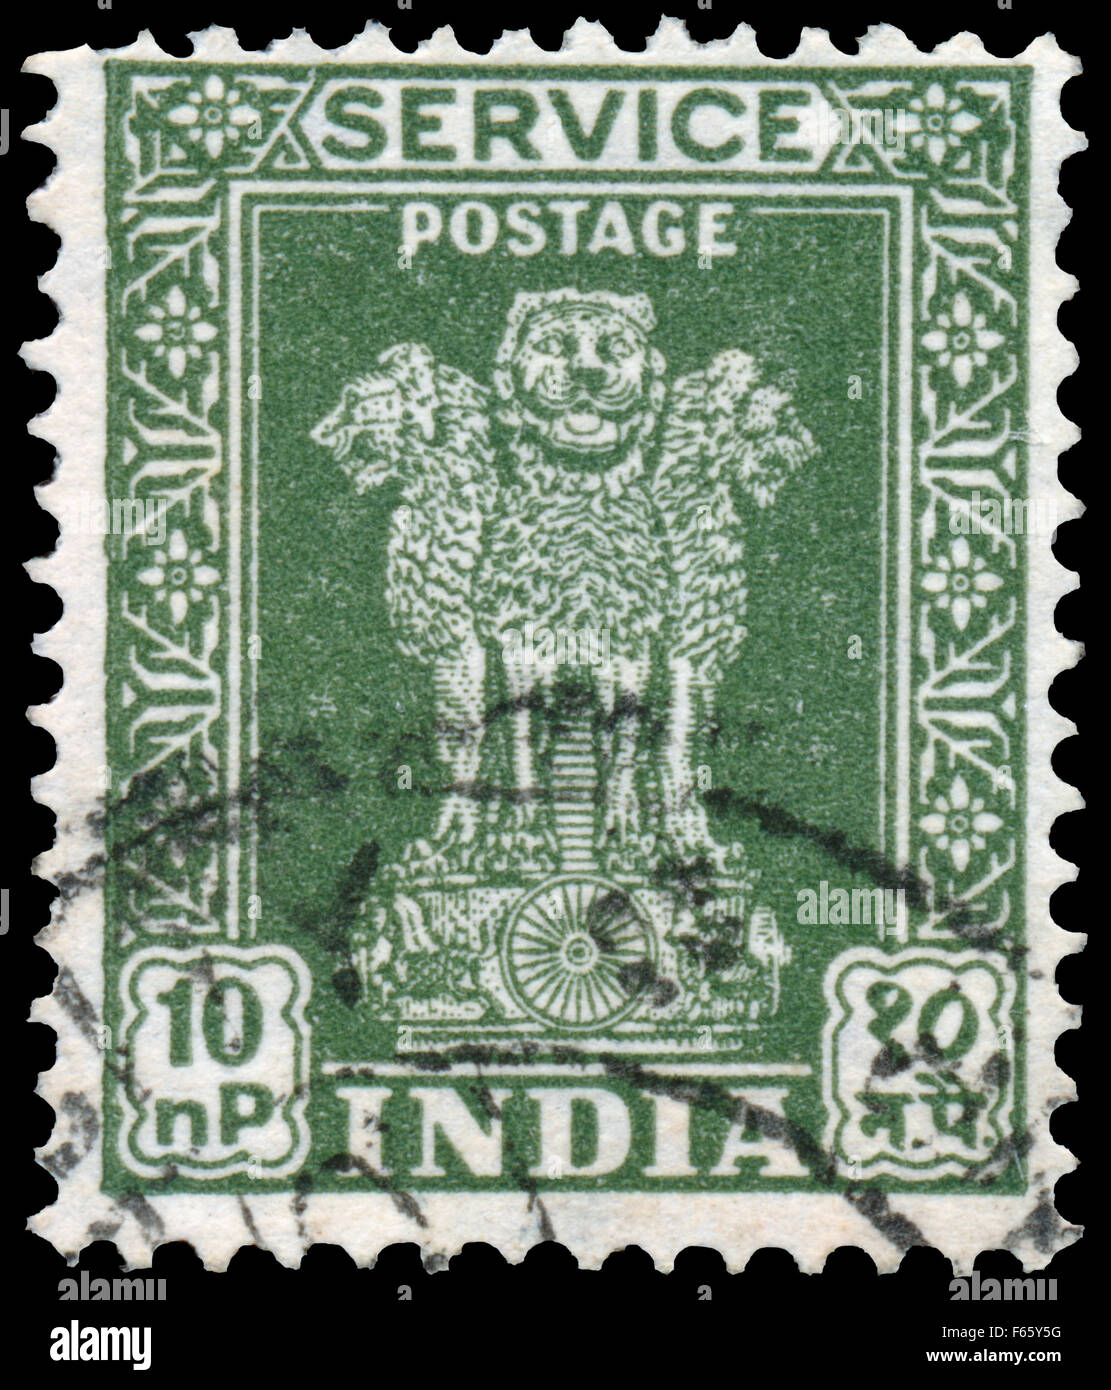 INDIA - CIRCA 1958: Stamp printed in India shows four Indian lions capital of Ashoka Pillar, circa 1958. Stock Photo